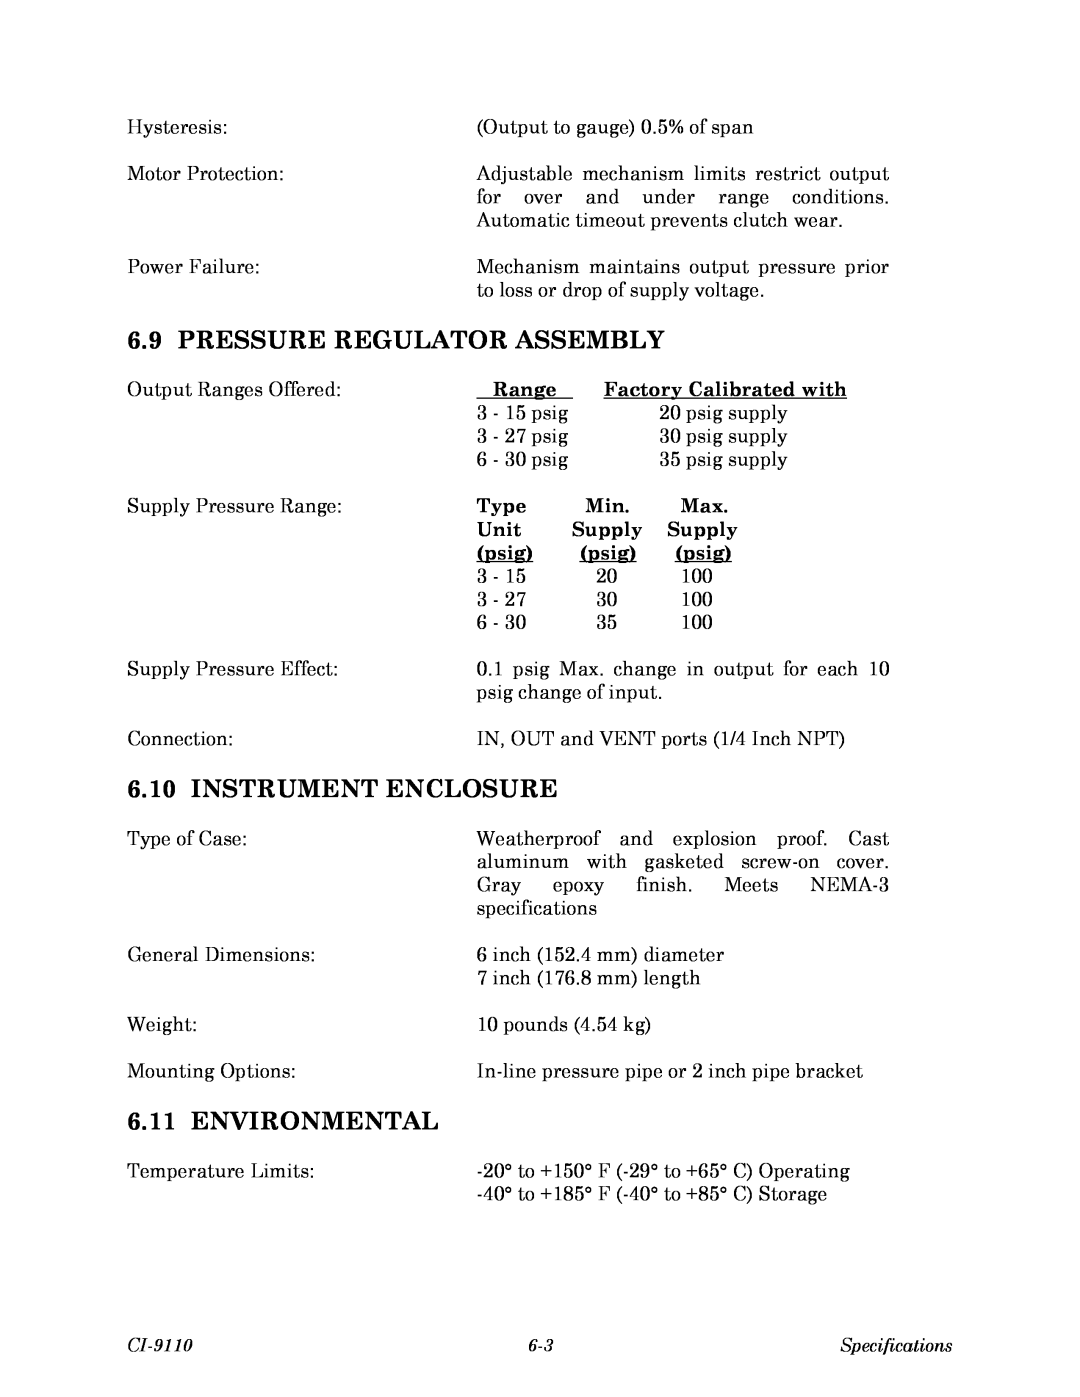 Emerson Process Management 9110-00A Pressure Regulator Assembly, Instrument Enclosure, Environmental, Range, Type, Unit 